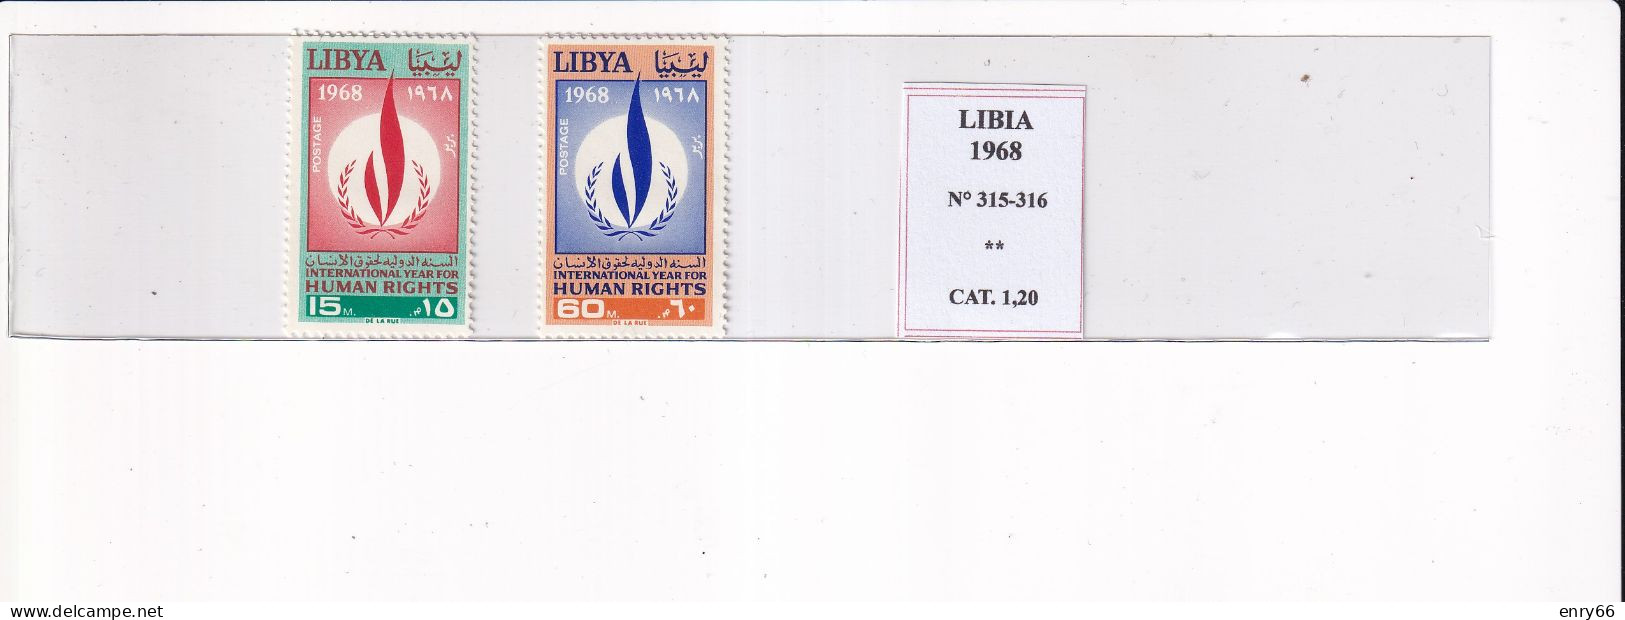 LIBIA 1968 N°315-316 MNH - Libia